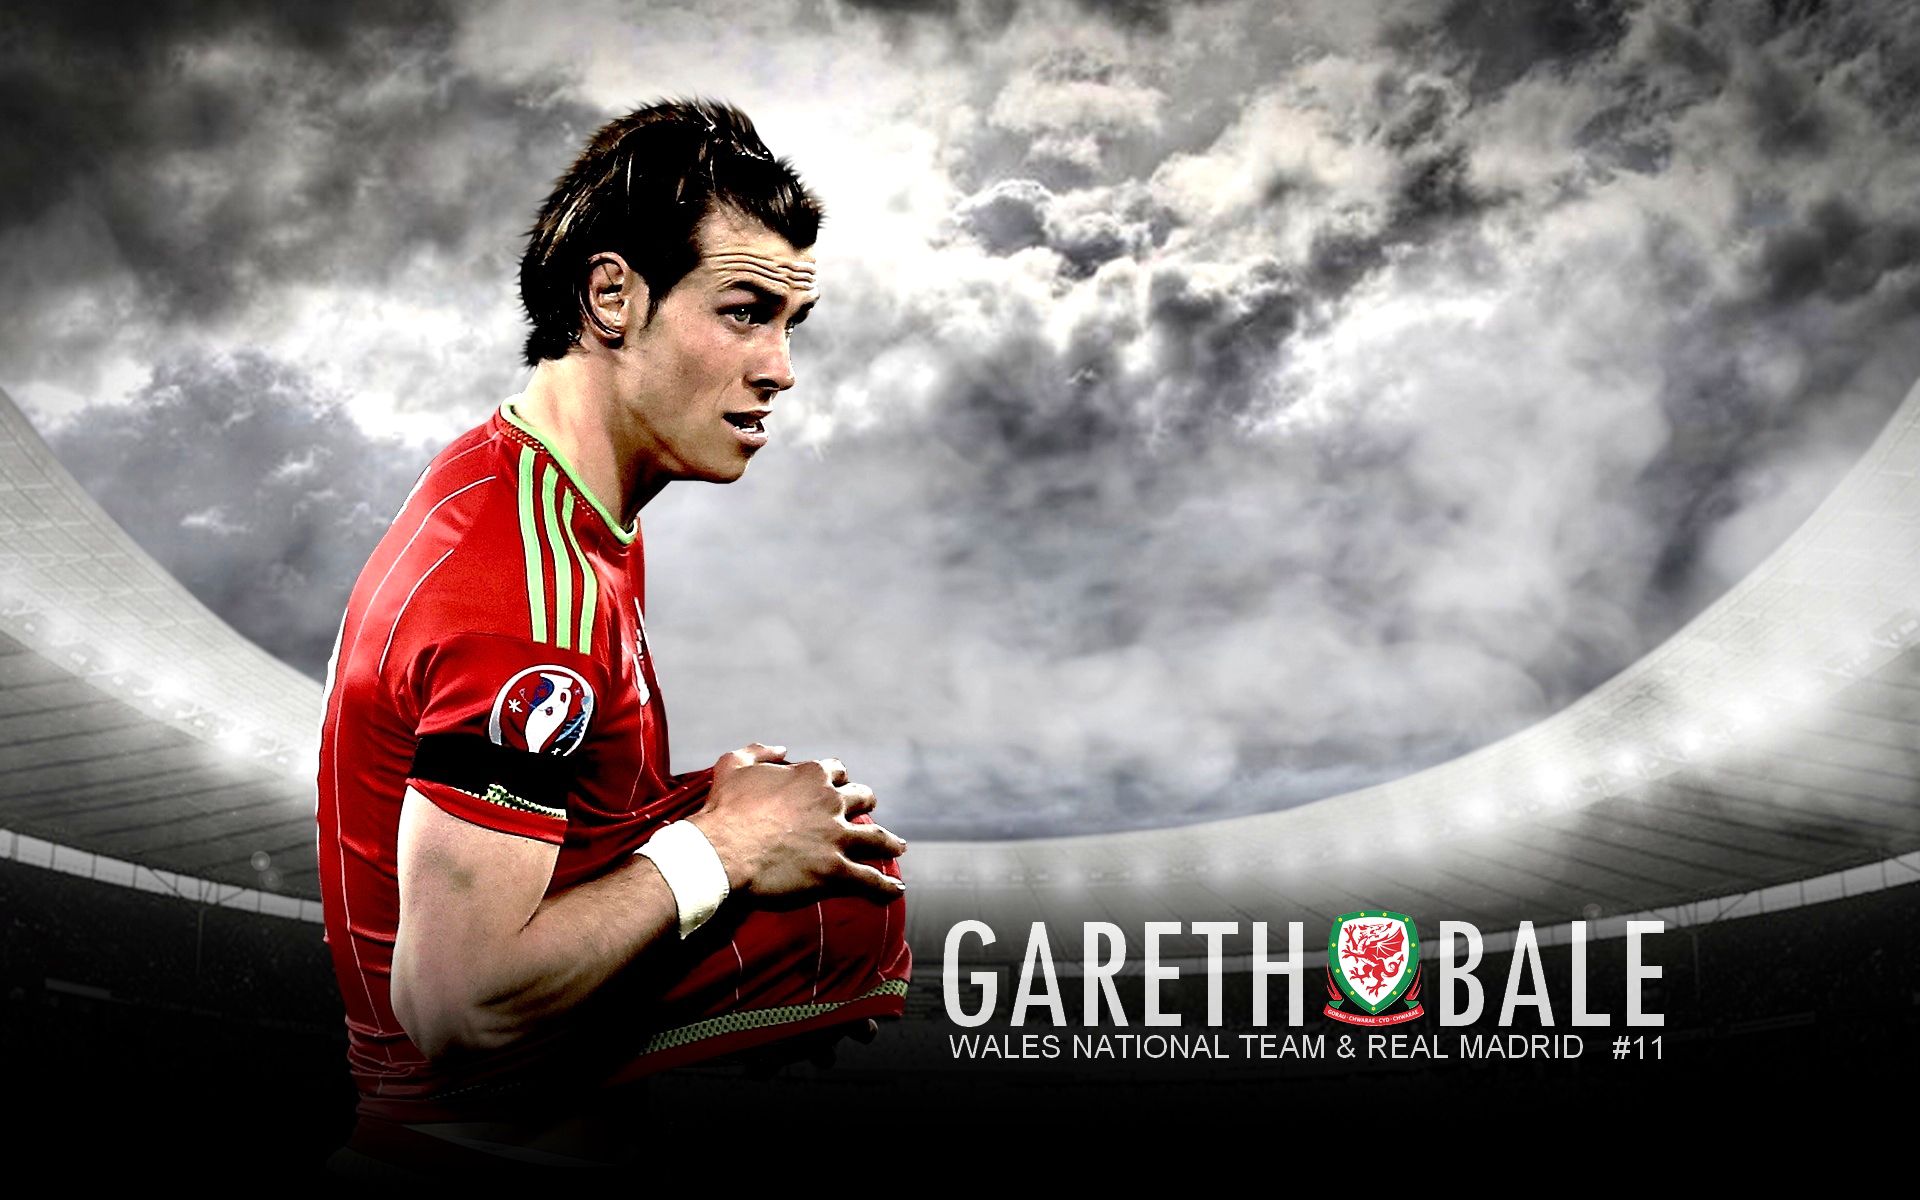 Gareth Bale Wallpaper Pictures Image